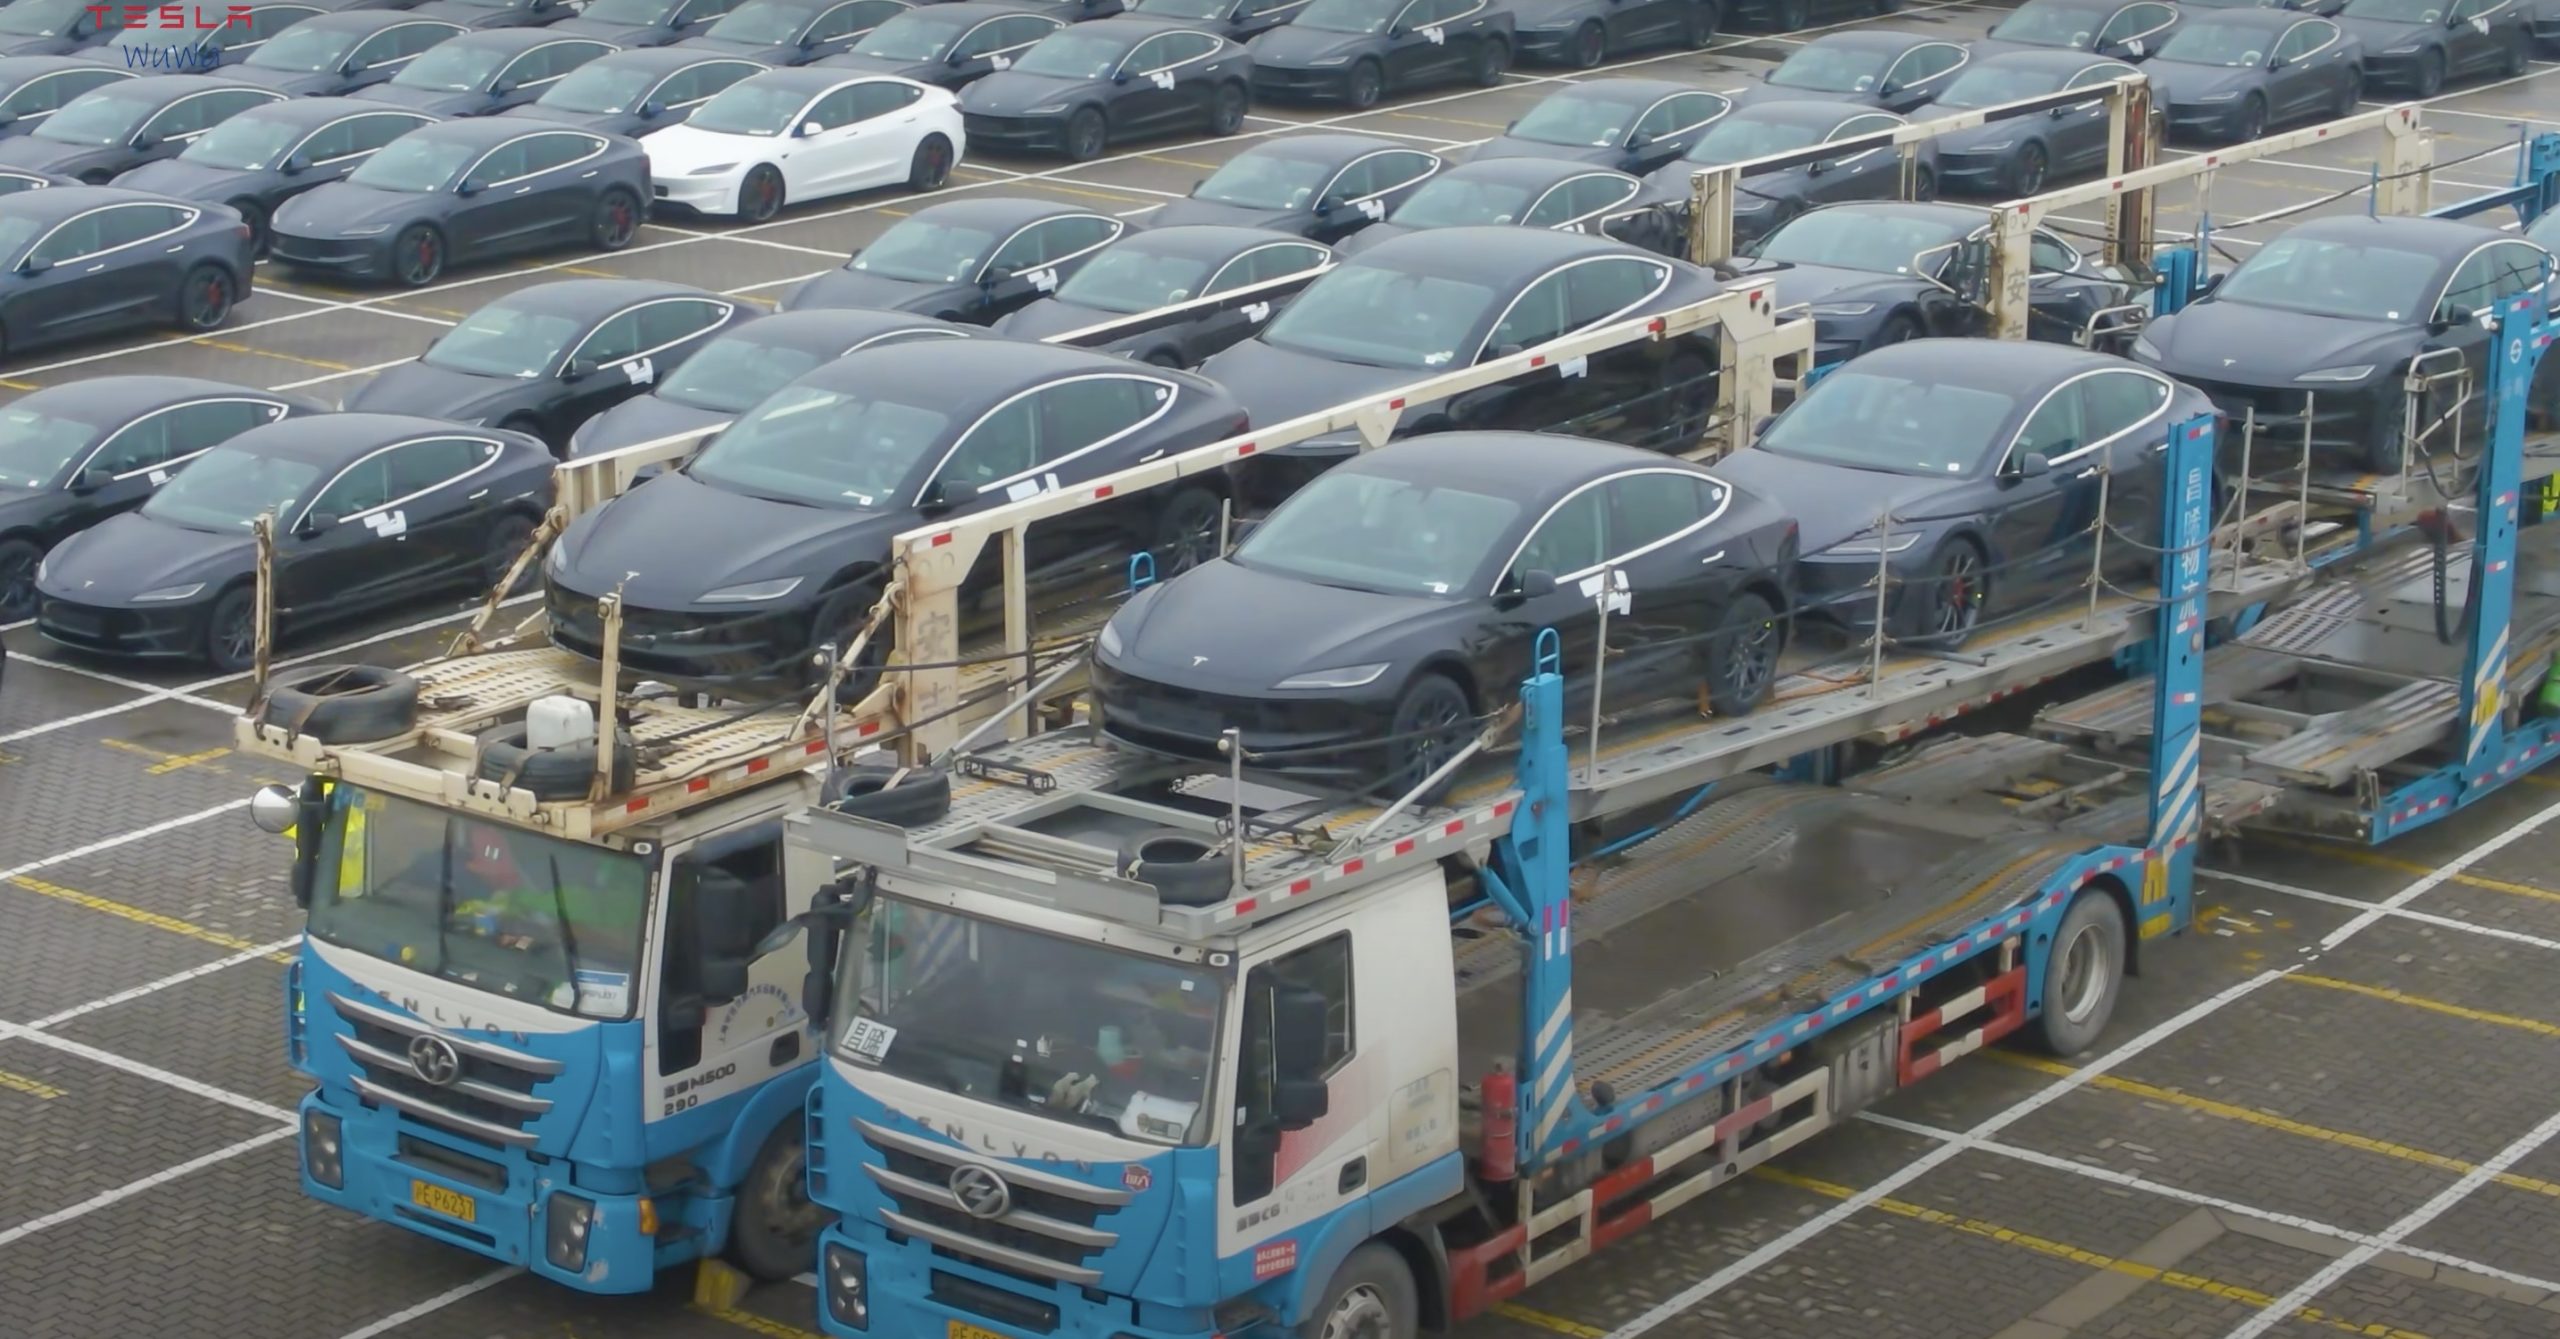 Tesla Model 3 Performance Export Fleet Spotted